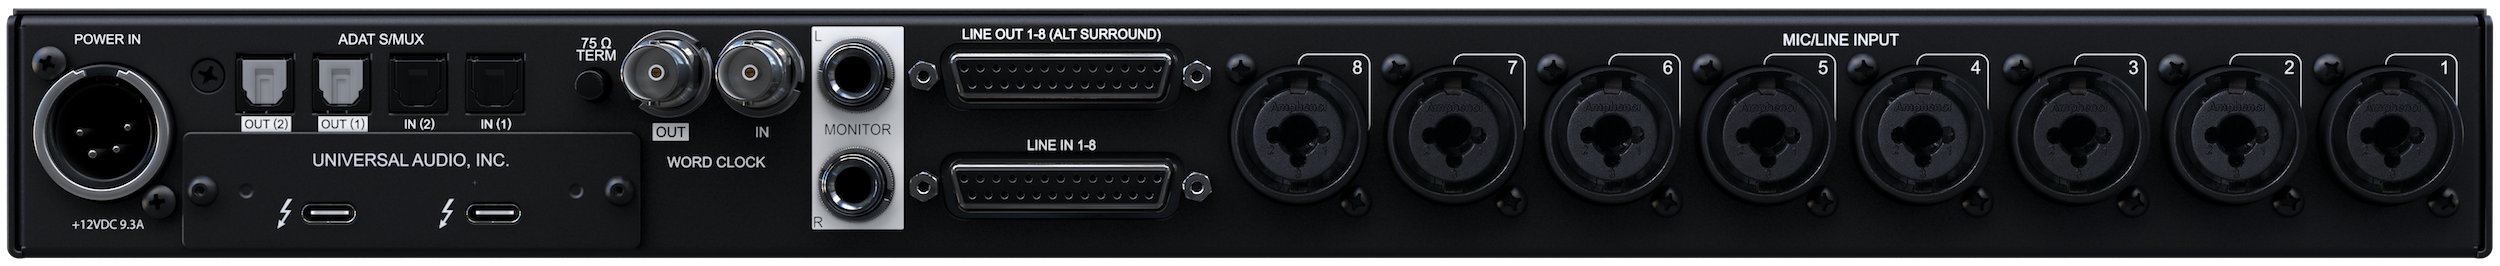 Universal Audio Apollo X8p Heritage Edition - Thunderbolt audio-interface - Variation 1